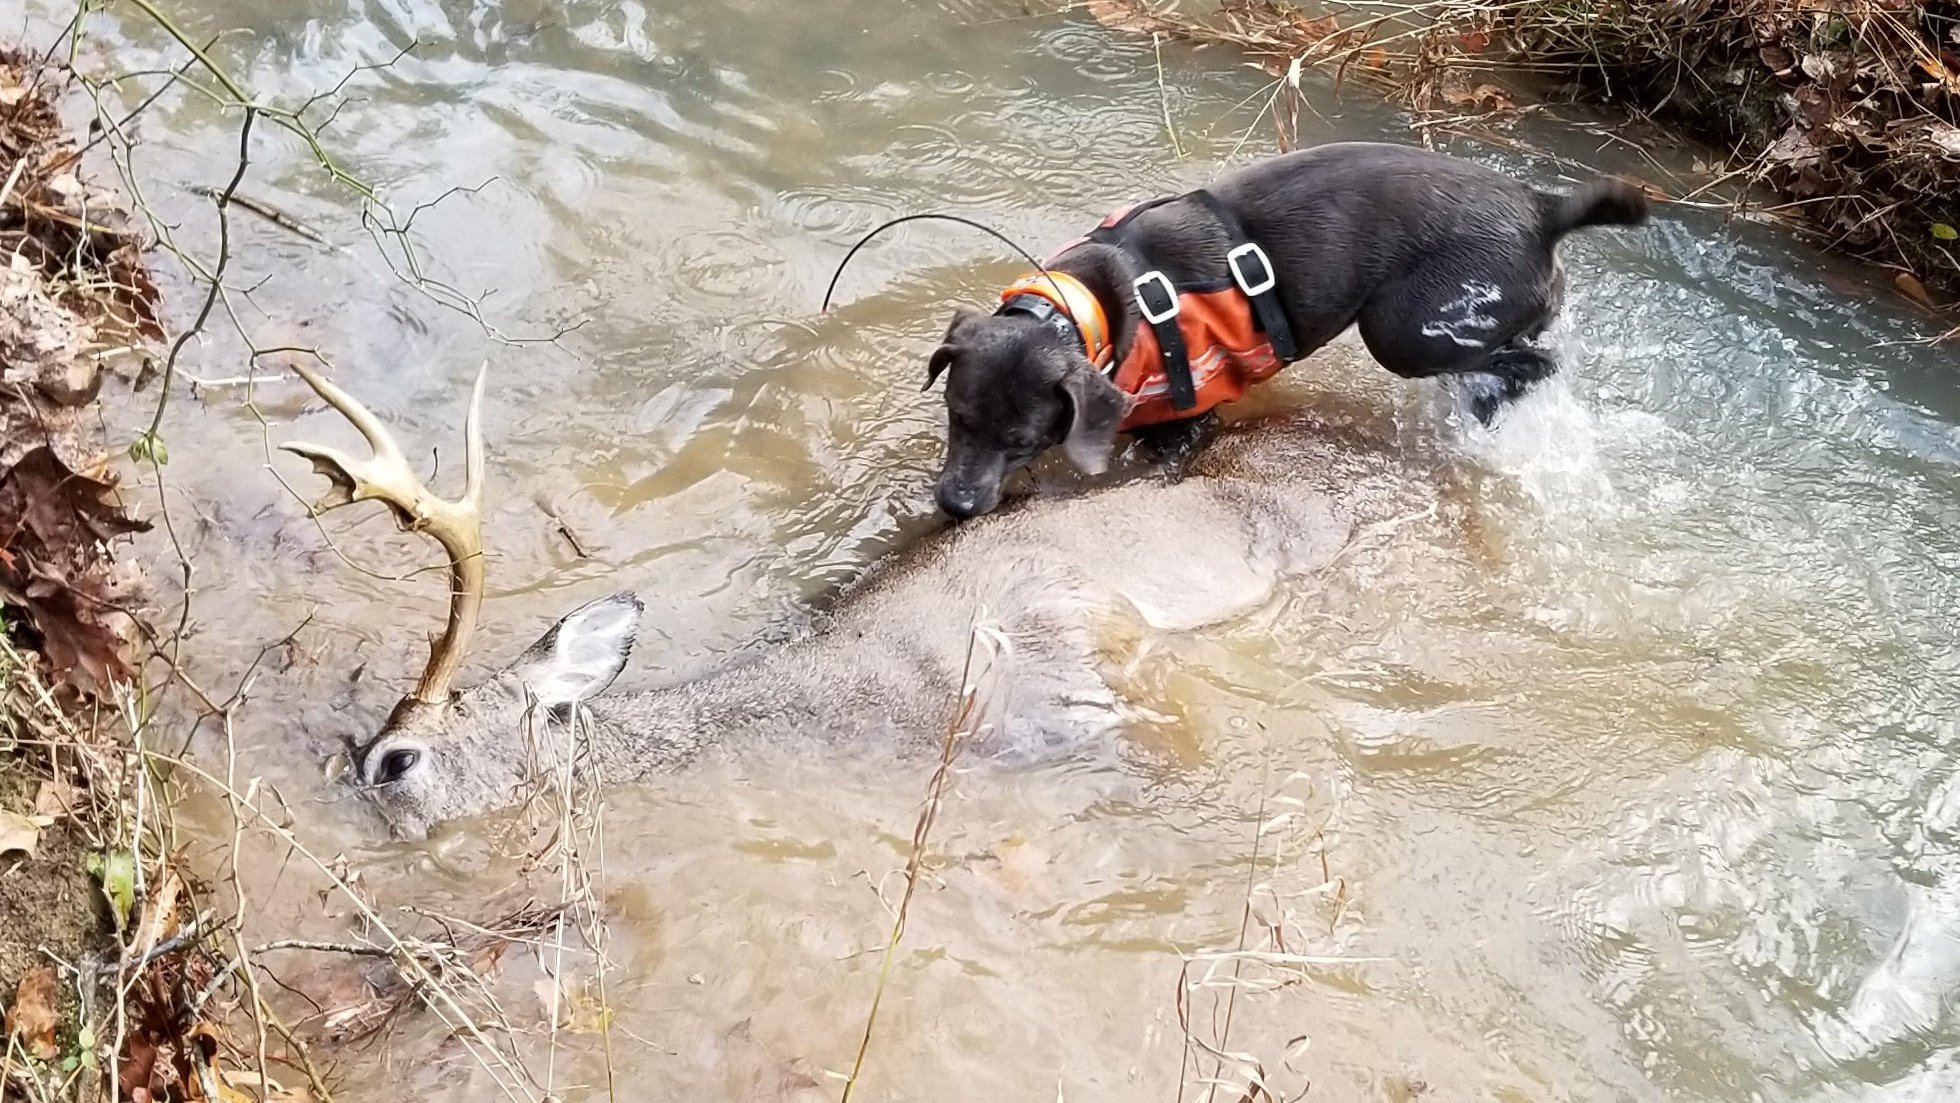 Tracking dog recovering deer for hunter